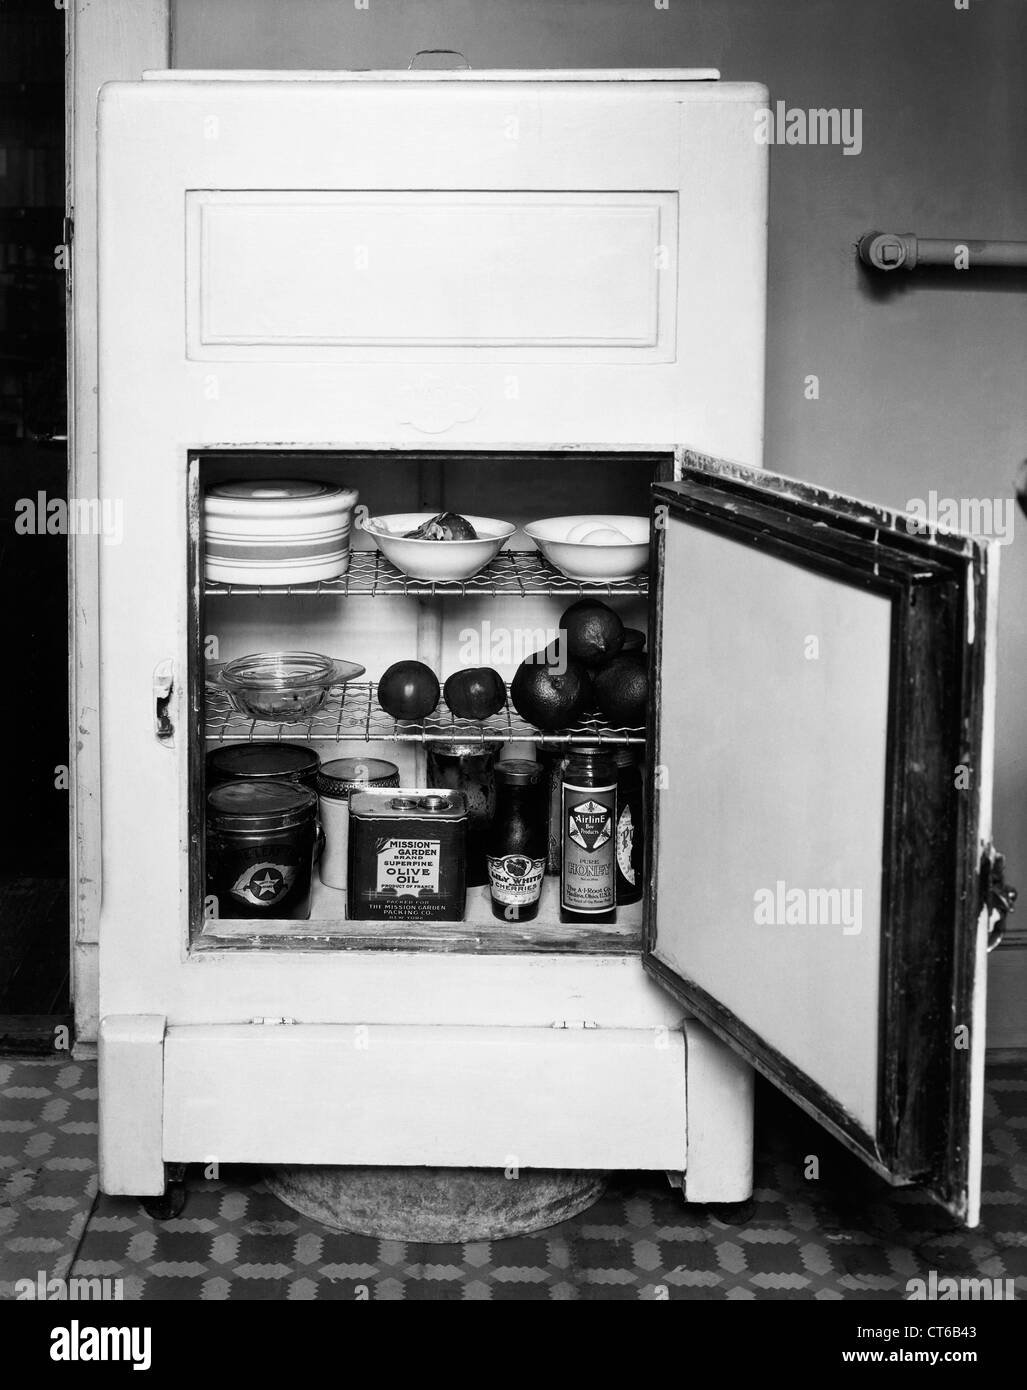 Vintage image of refrigerator with door open Stock Photo